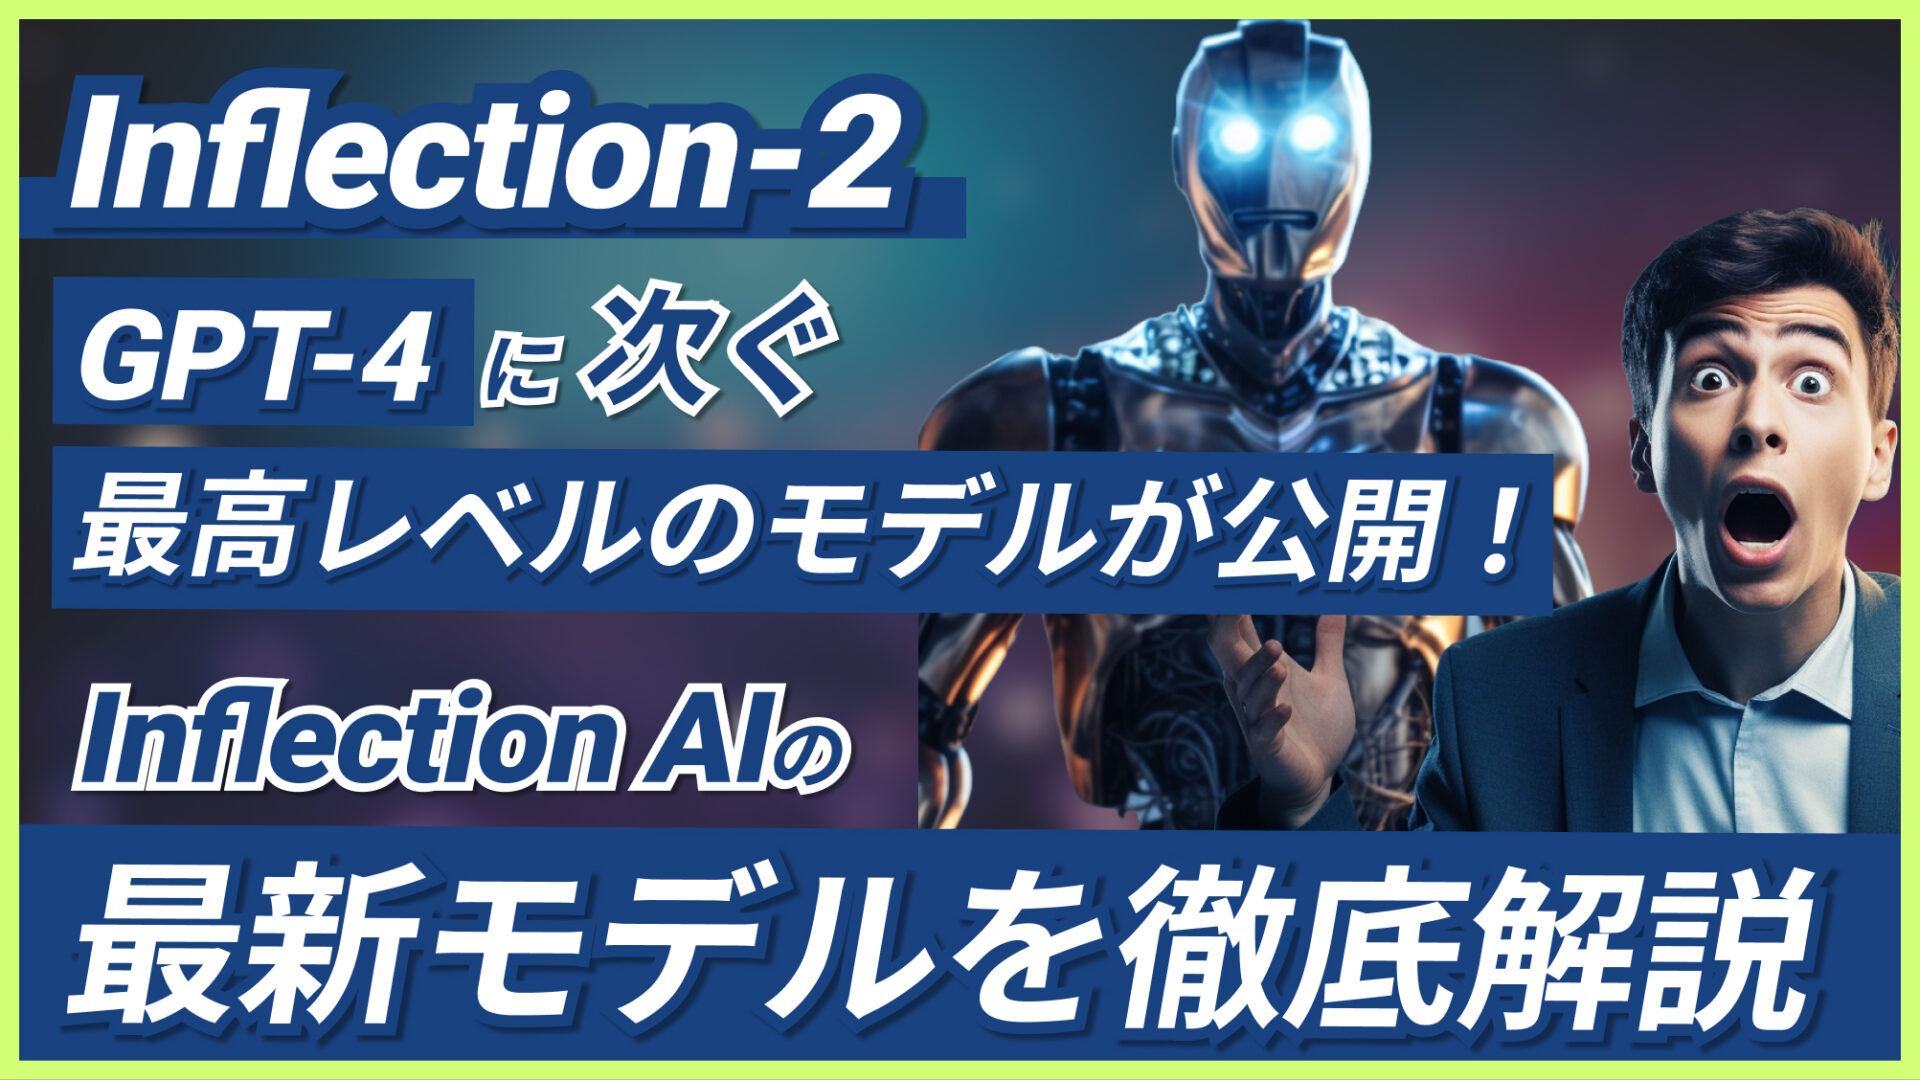 Inflection-2 GPT-4 nflection-AI 最新モデル